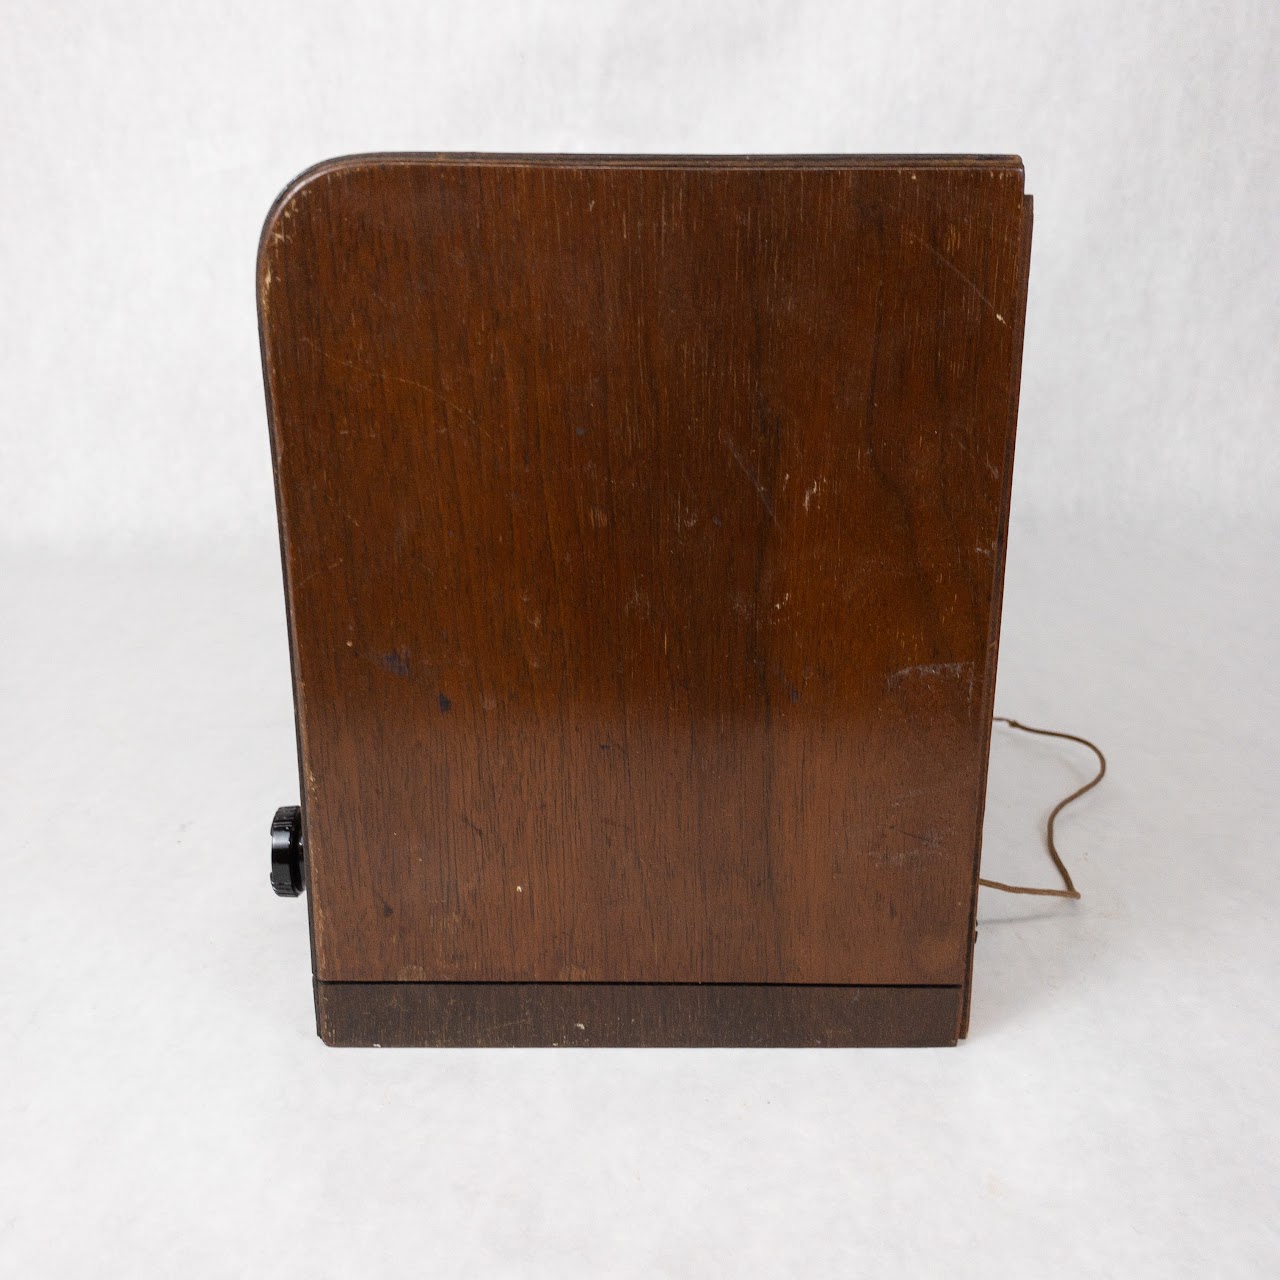 Emerson Vintage Tube Table Radio